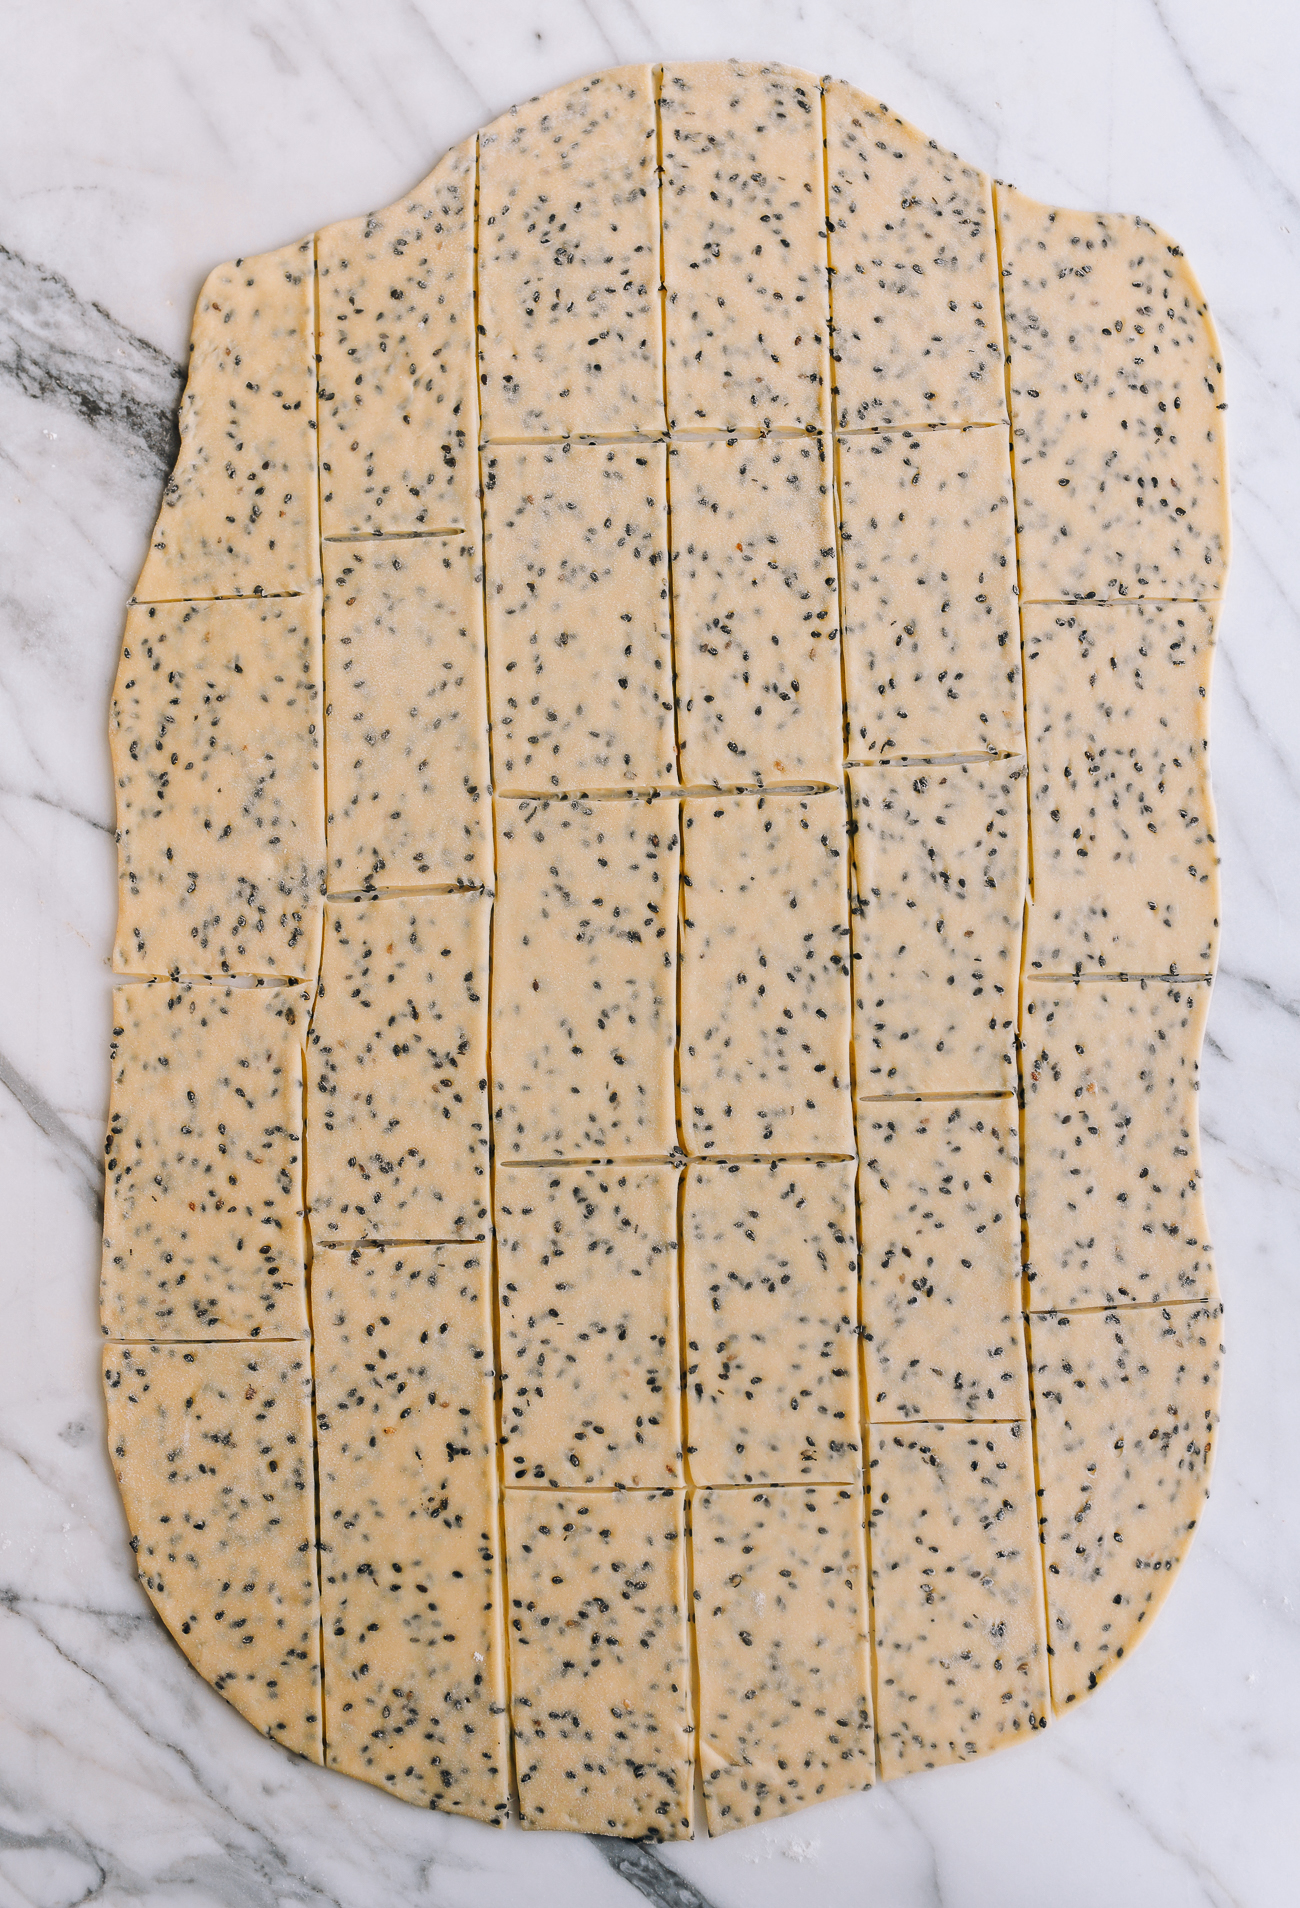 Sesame dough cut into strips